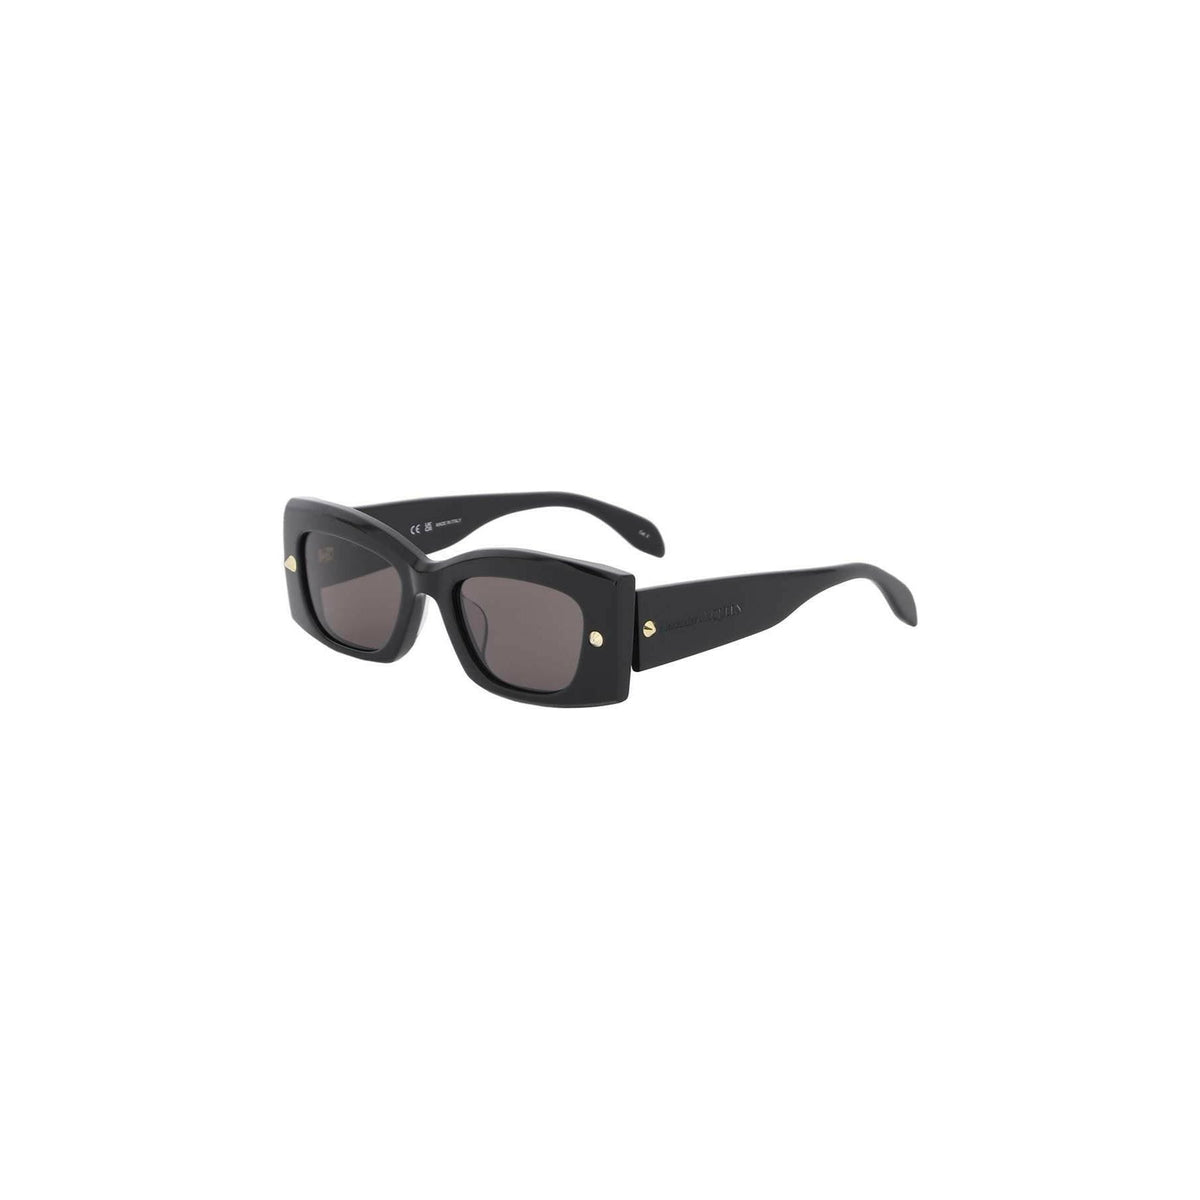 ALEXANDER MCQUEEN - Spike Studs Rectangular Sunglasses in Black/Smoke - JOHN JULIA